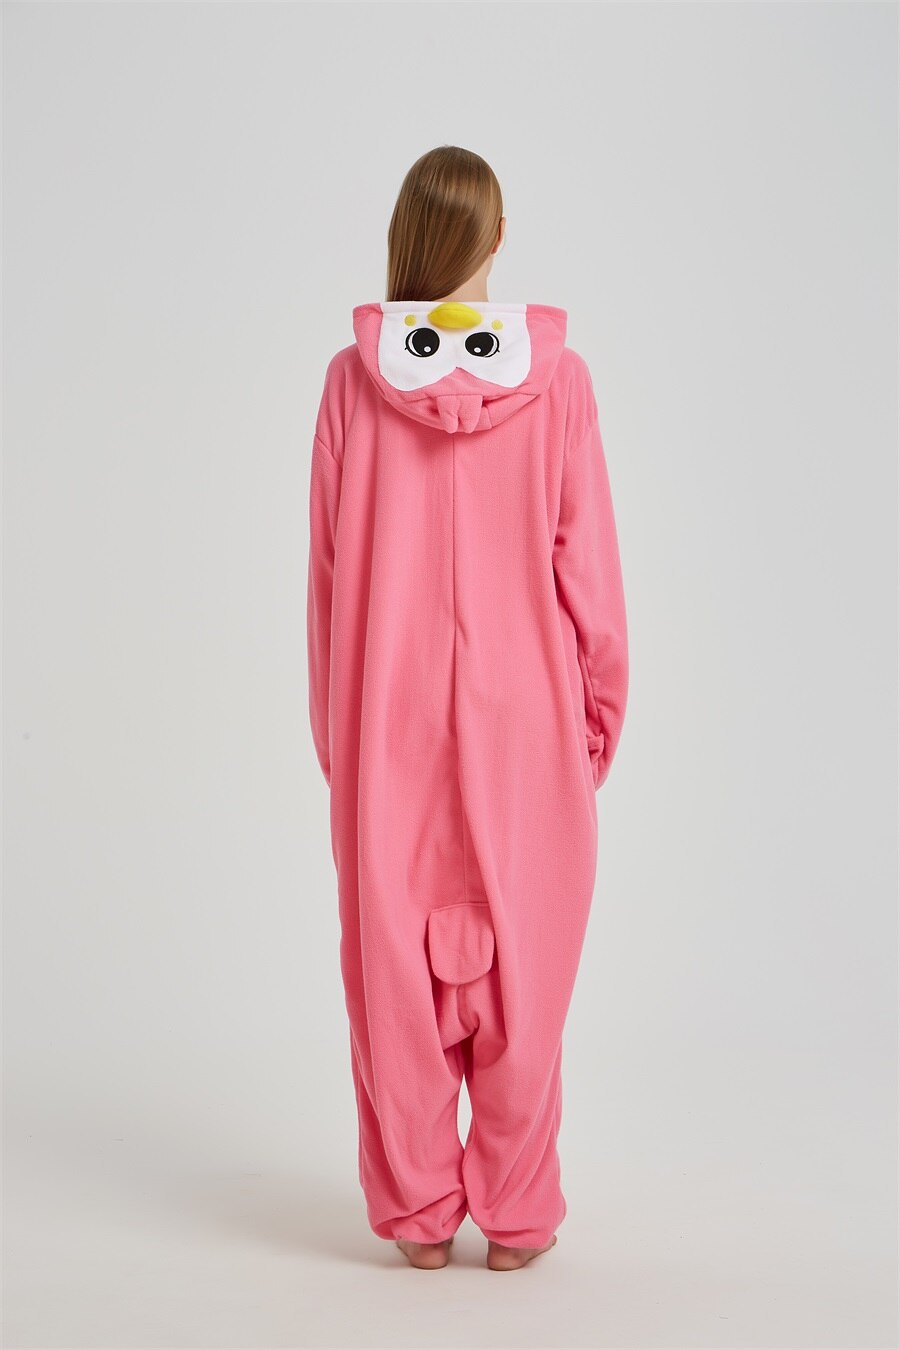 Unisex Penguin Kigurumis Women Pink Onesies Adult Winter Pajama Cute Jumpsuit Polar Fleece Animal Overalls Halloween Suit